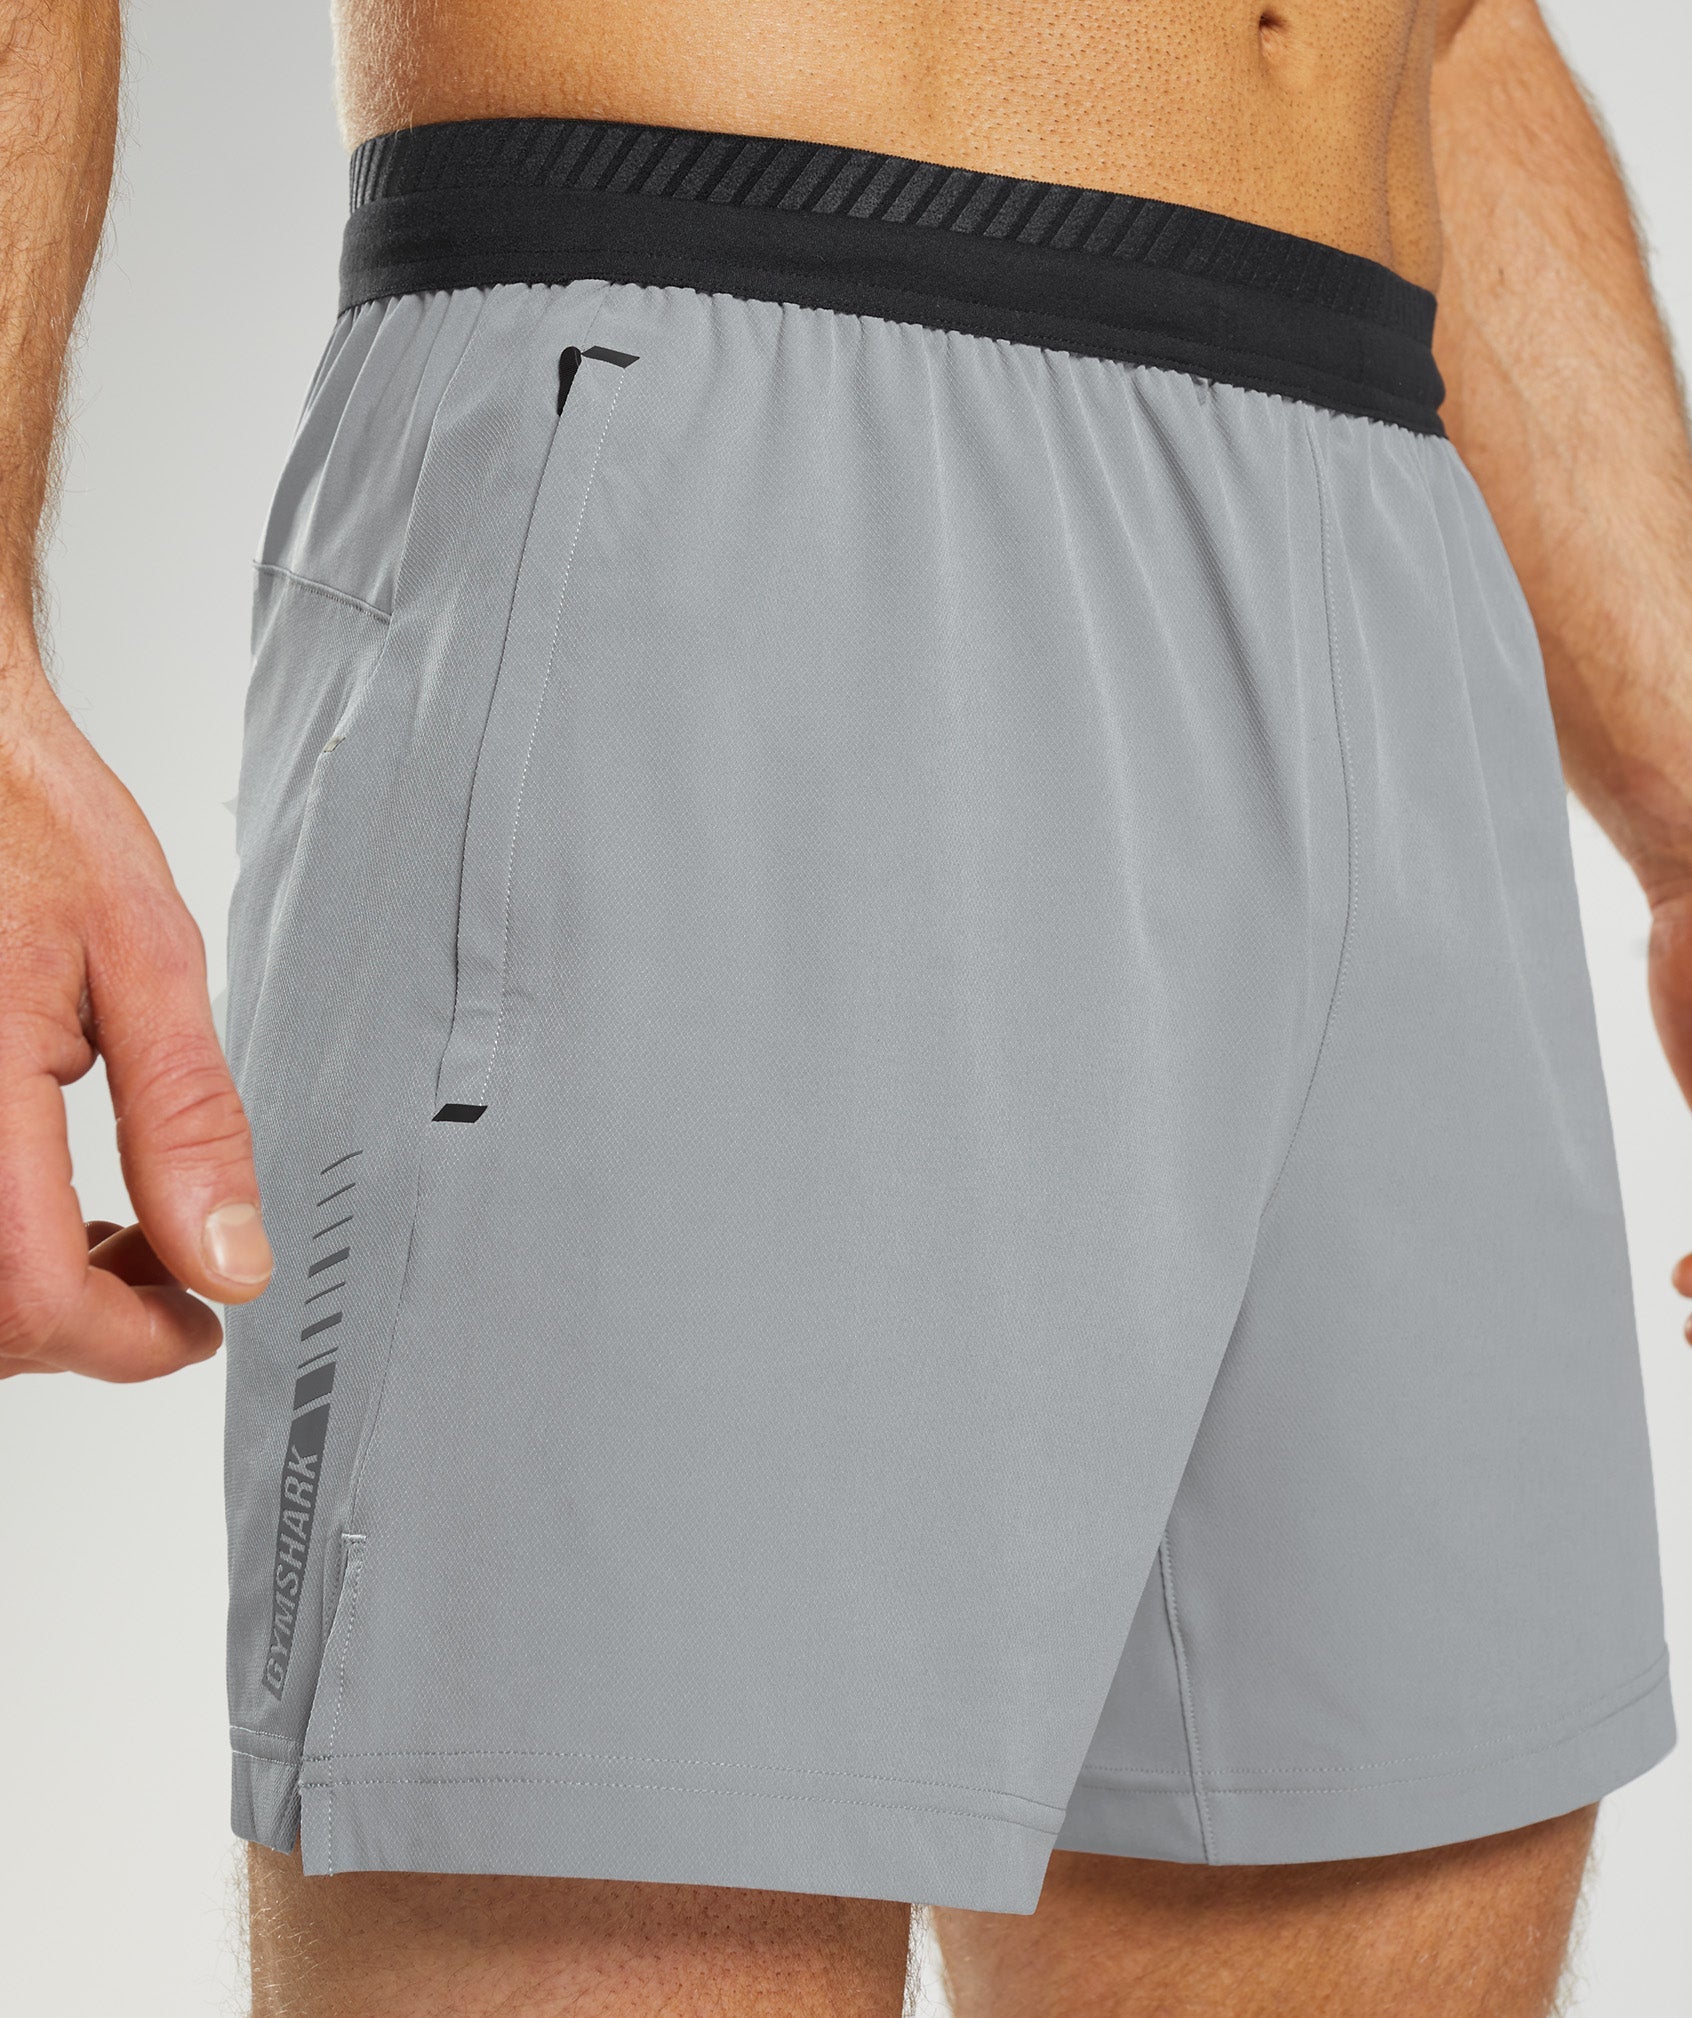 Apex 5" Hybrid Shorts in Drift Grey - view 6